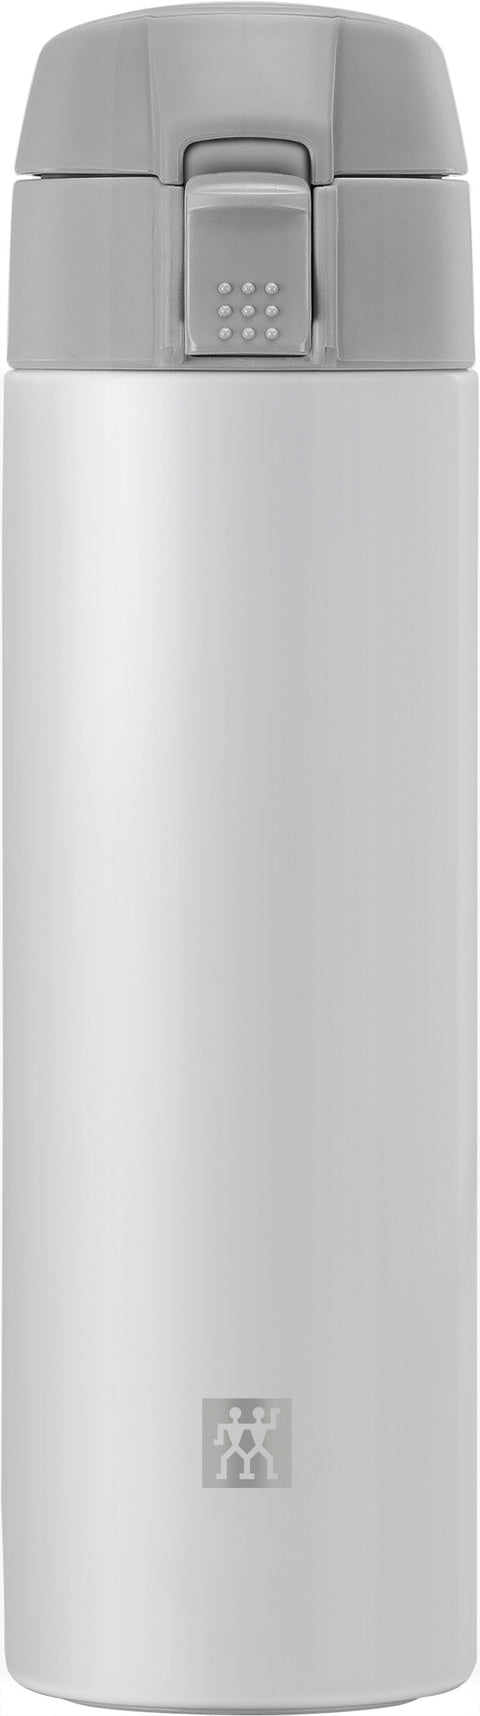 Thermo - Travel Bottle - 450ml, Silver-White